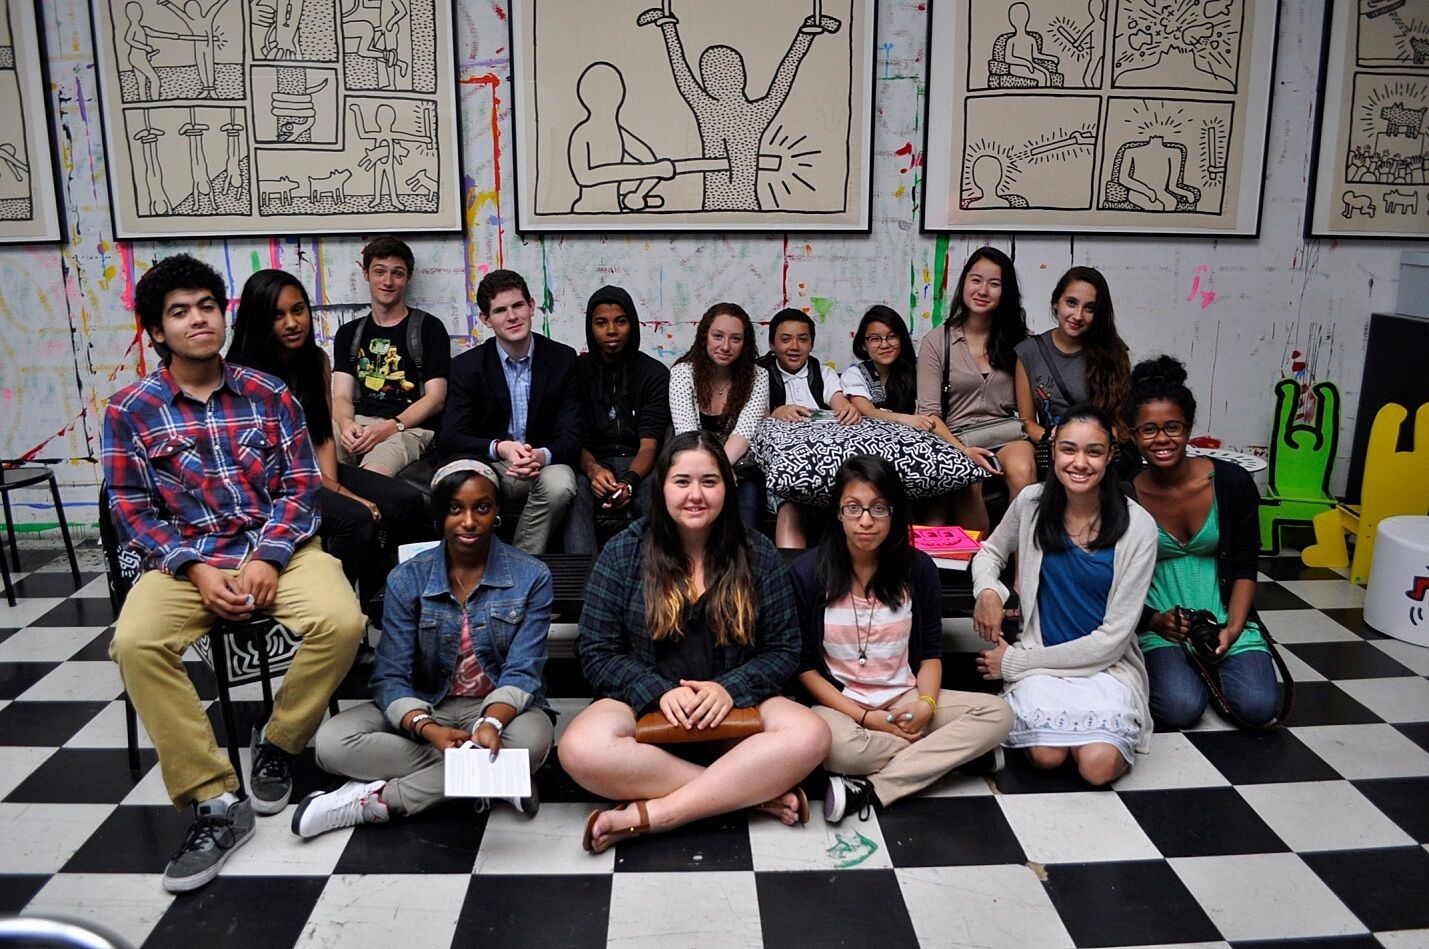 Group shot at the Keith Haring Foundation